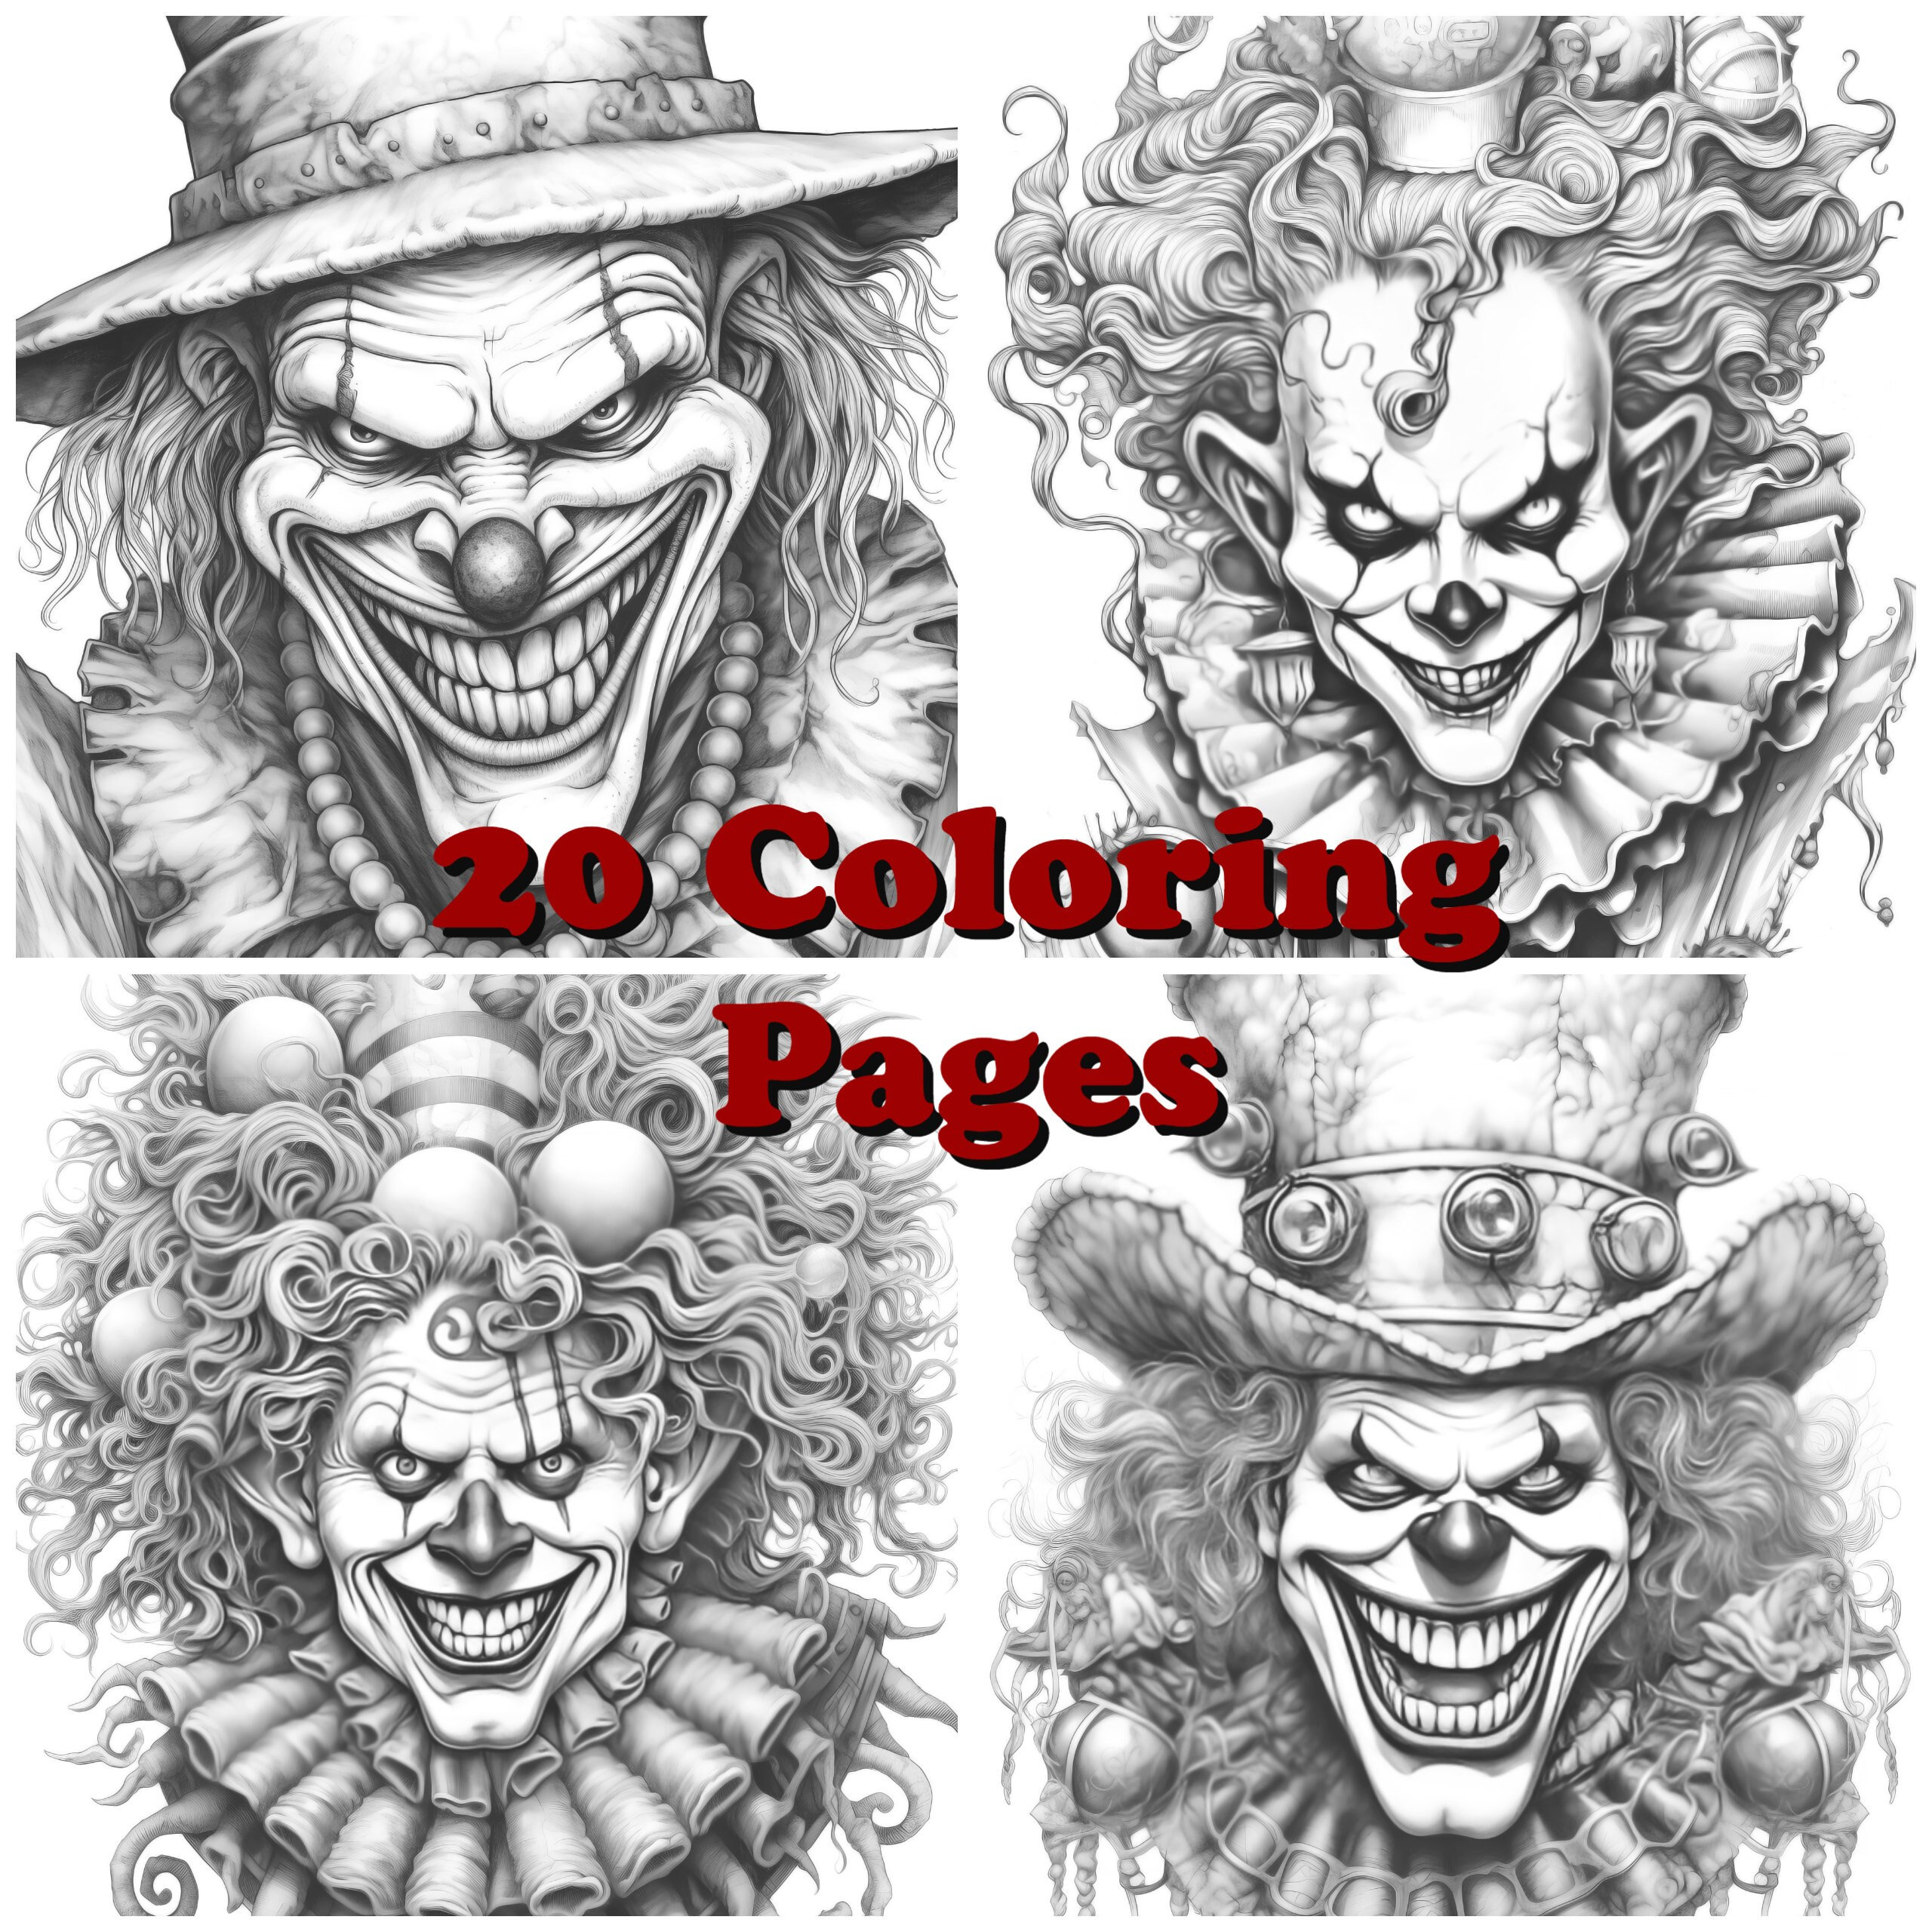 Evil clown coloring pages vol crazy clown coloring sheets scary clown coloring book evil designs halloween